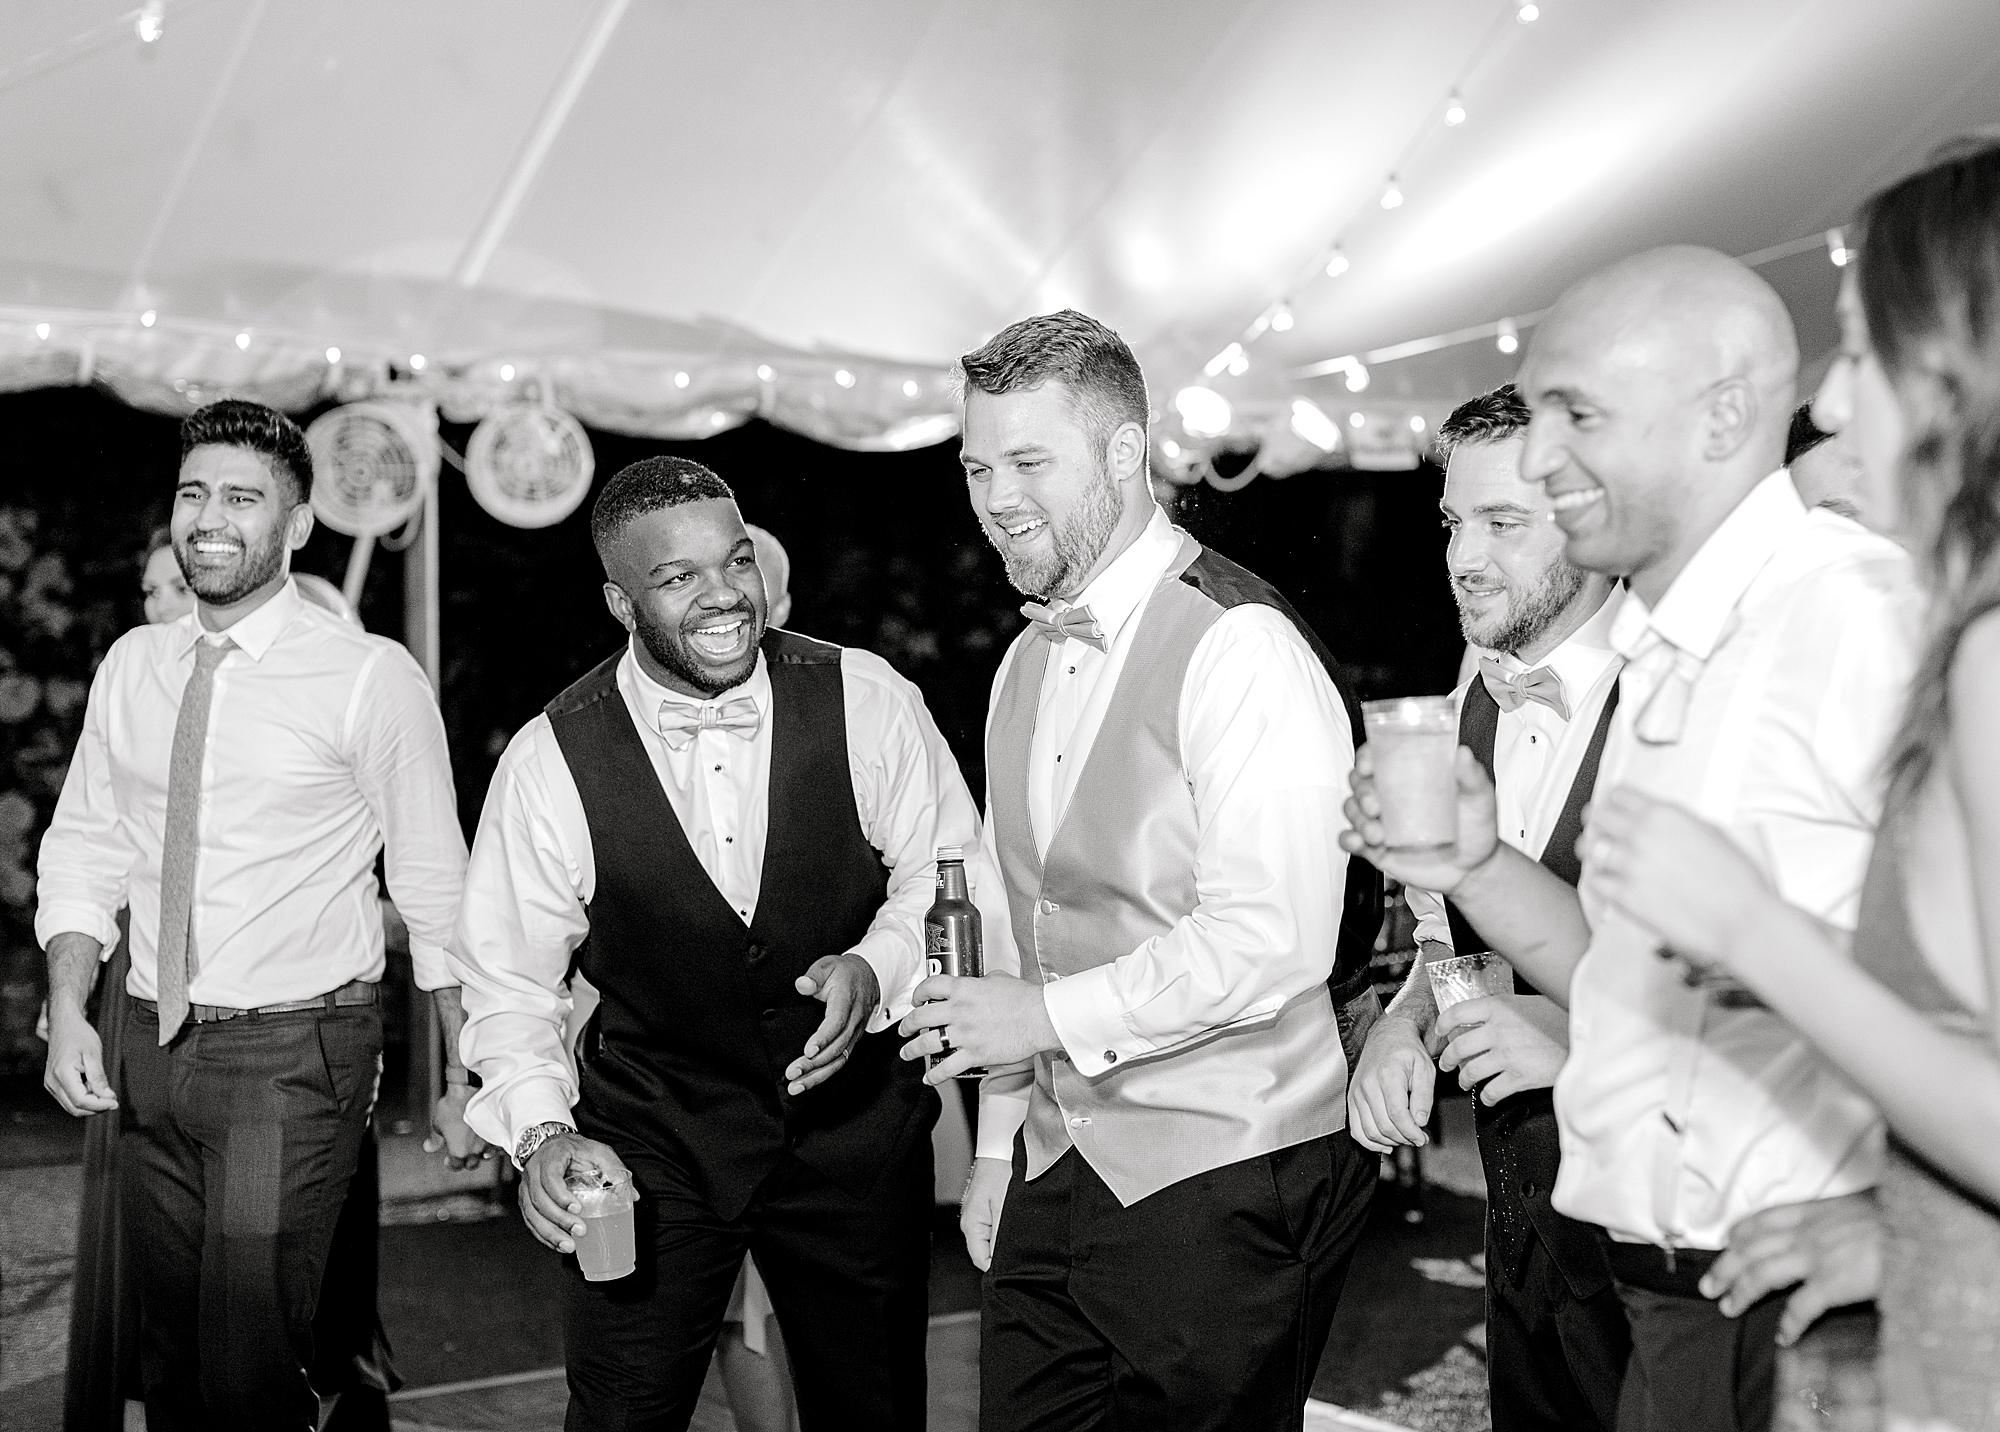 Guests dancing at wedding reception.